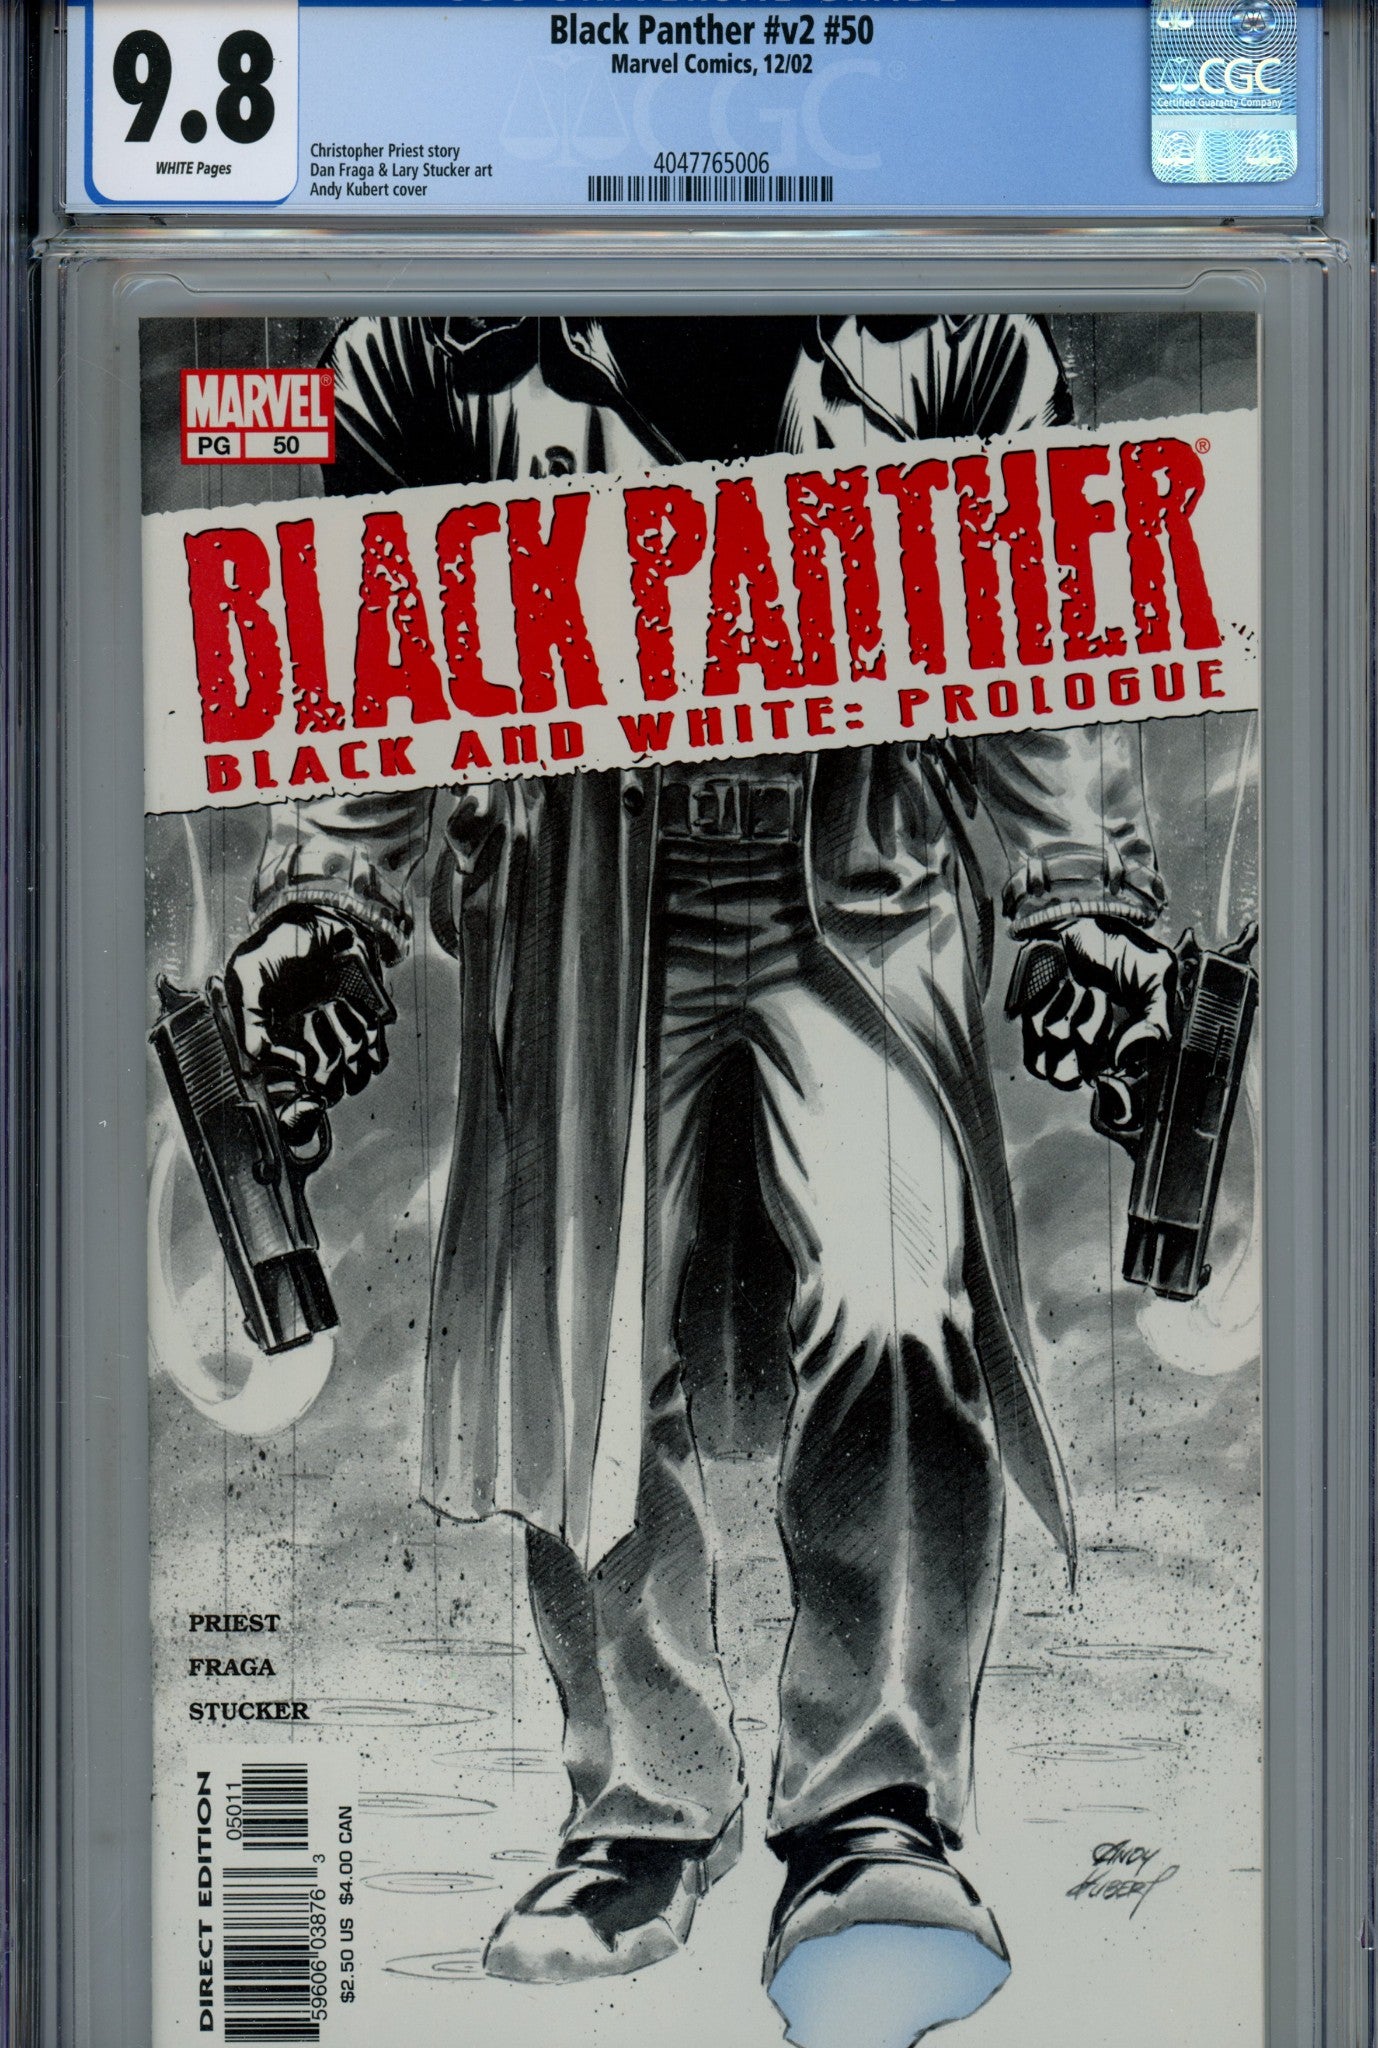 Black Panther Vol 2 50 CGC 9.8 (2002)